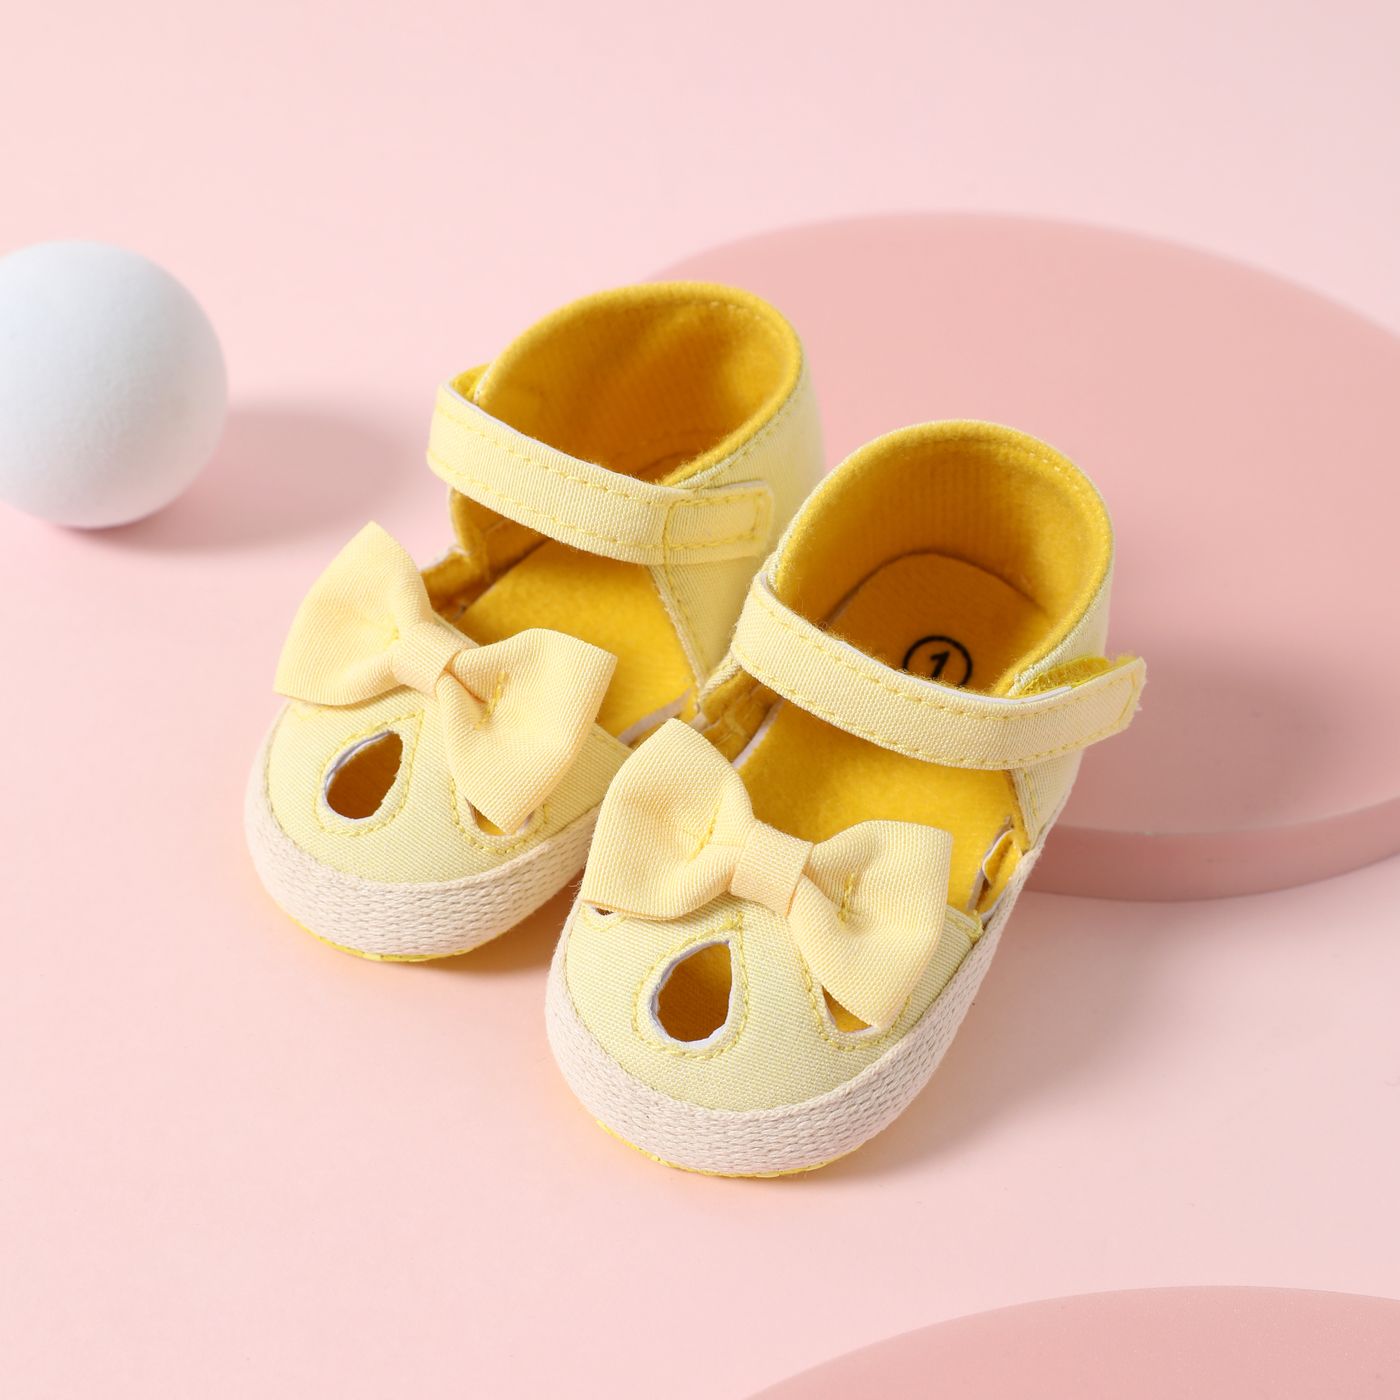 Baby Girl Denim Leopard Print Bow Decor Sleeveless Overalls/ Handbag/ Shoes